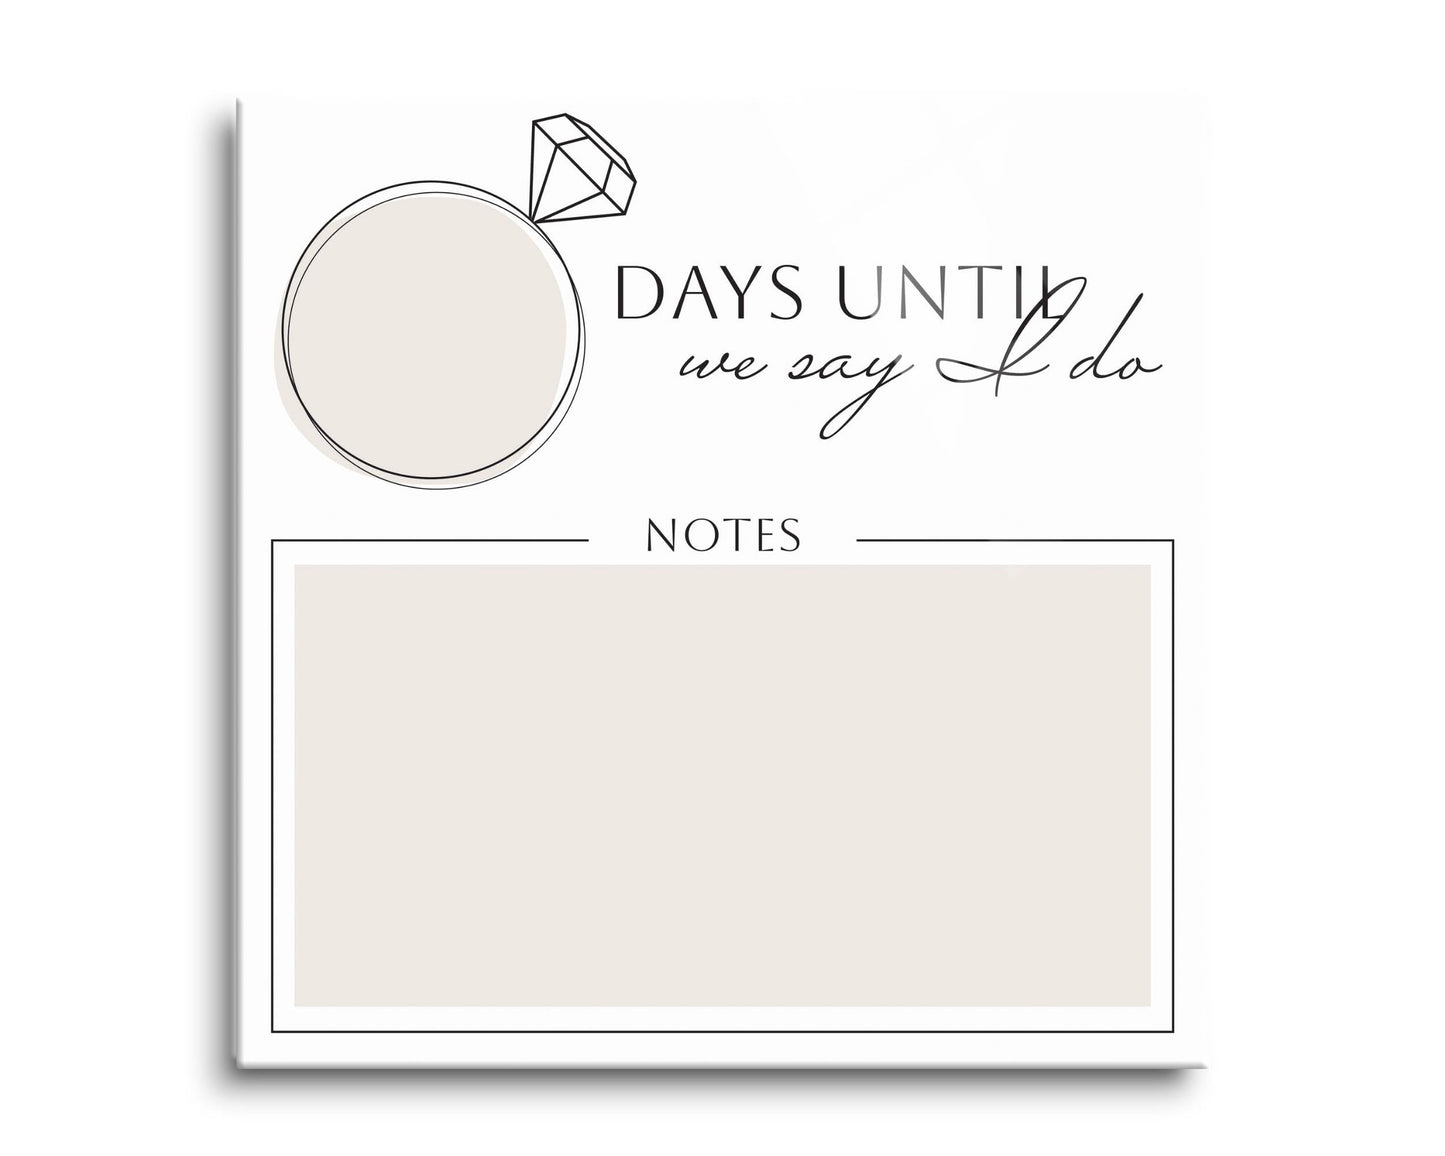 Minimalistic Beige Wedding Countdown with Notes | 8x8